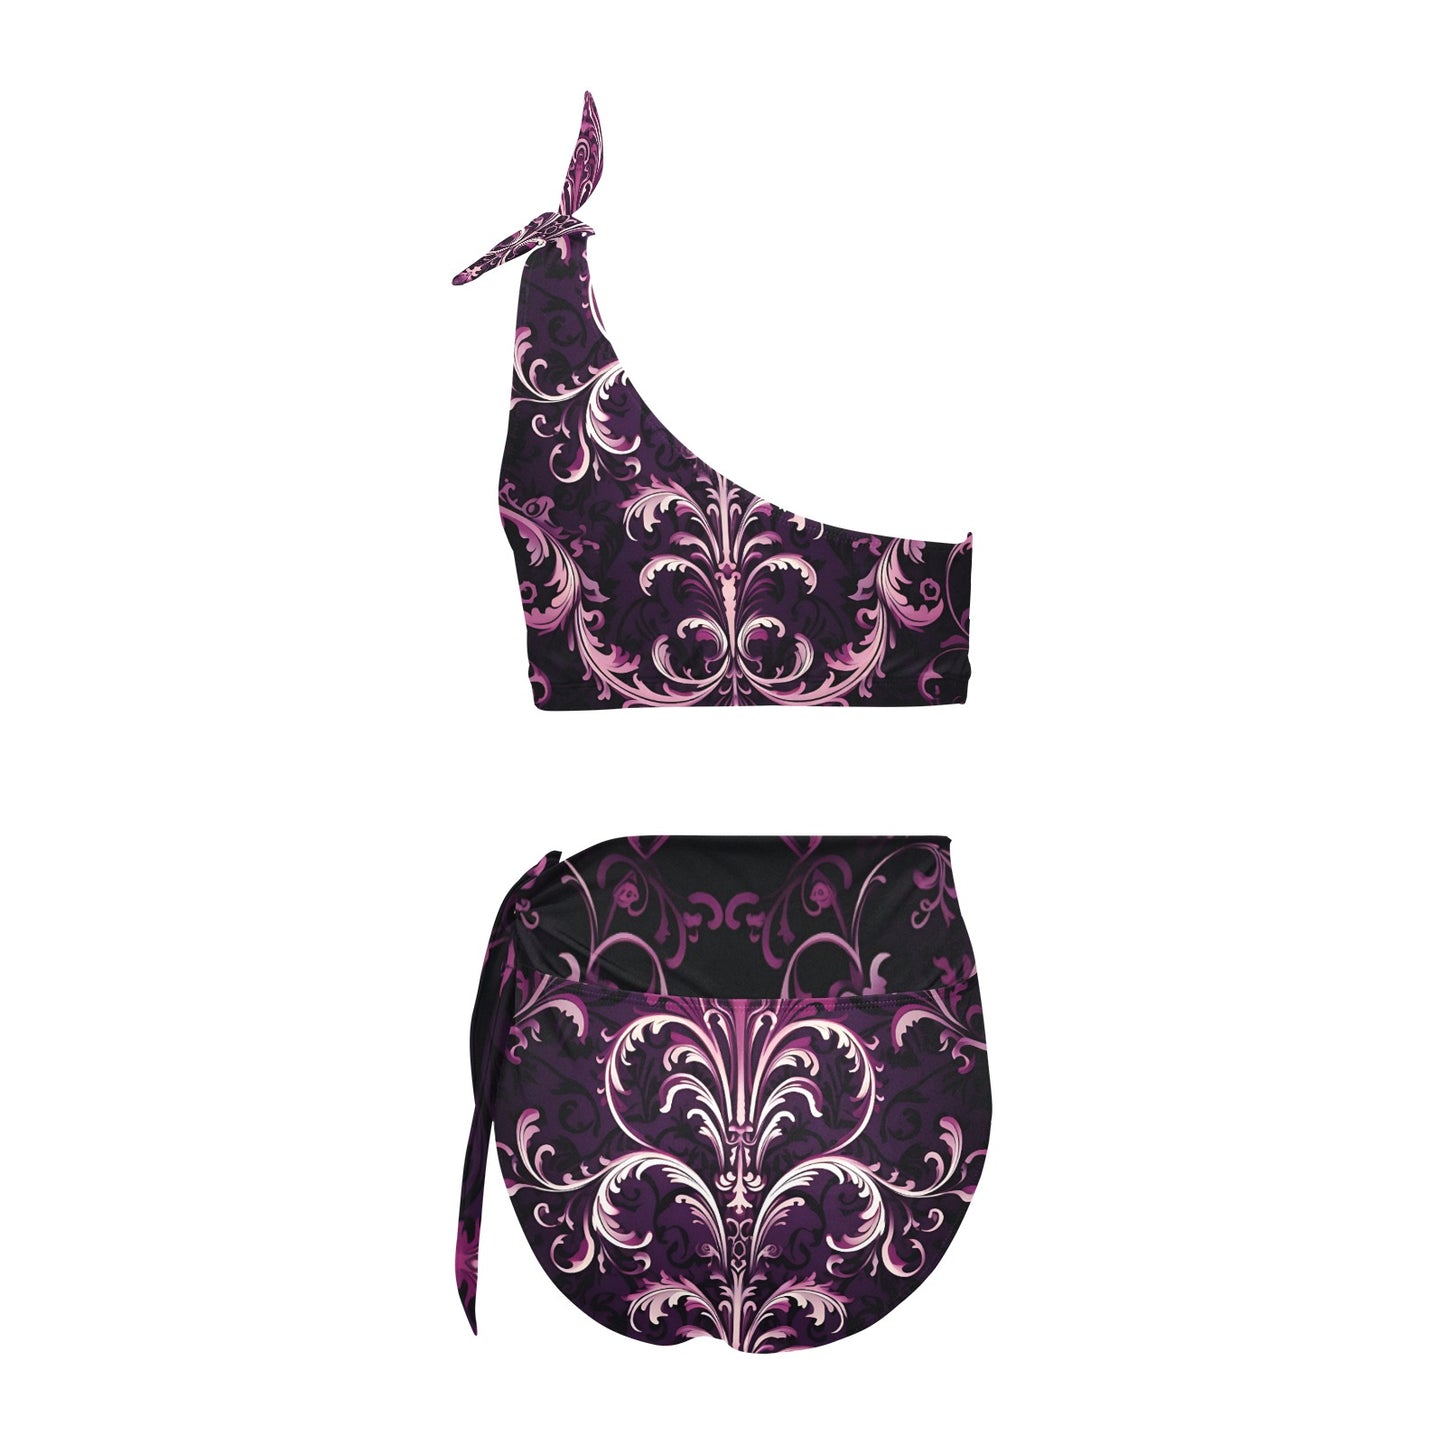 Gothic Purple Design High Waisted One Shoulder Bikini Set